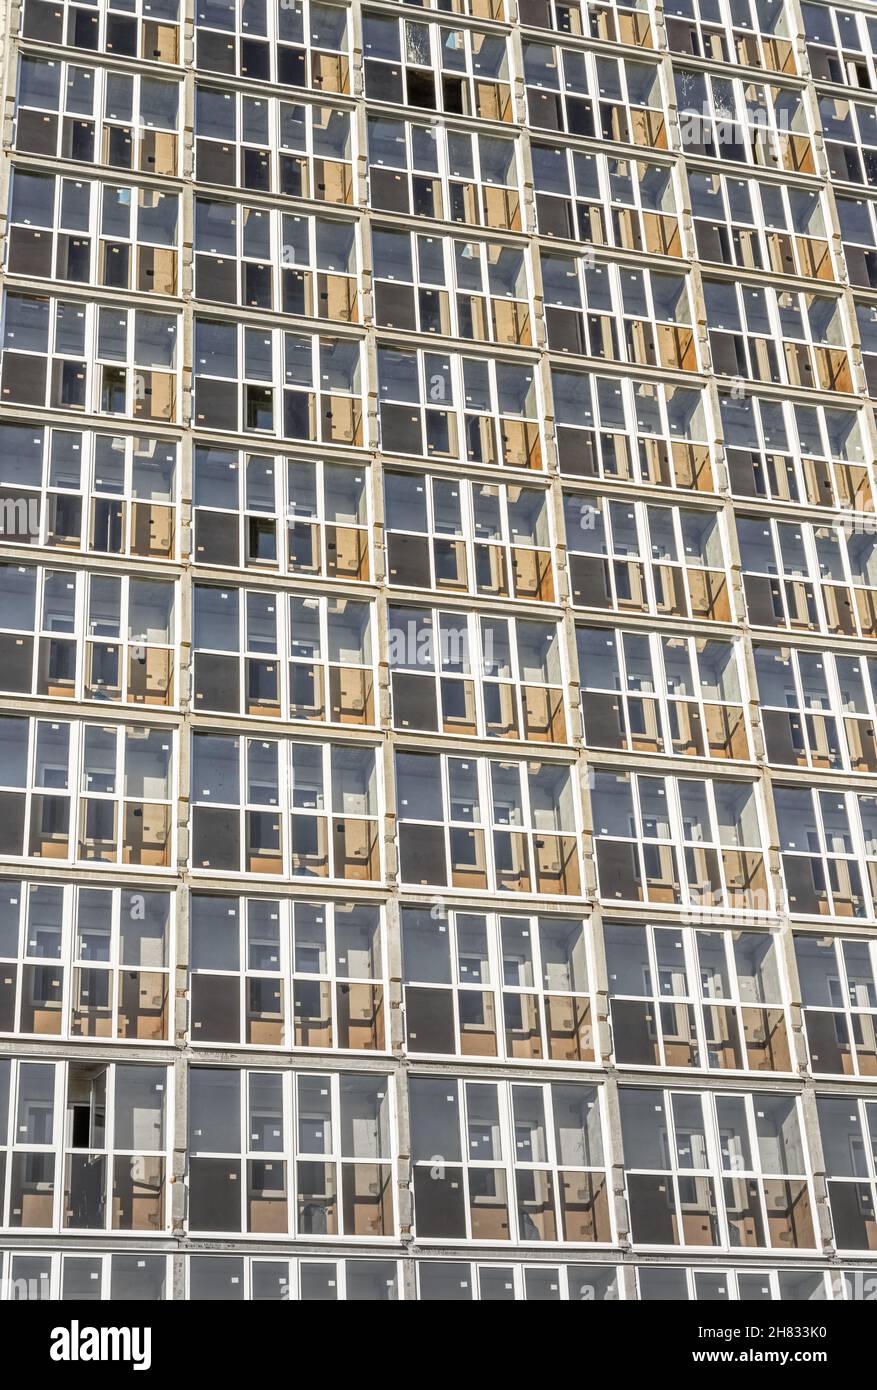 Windows pattern textures exterior of building Stock Photo